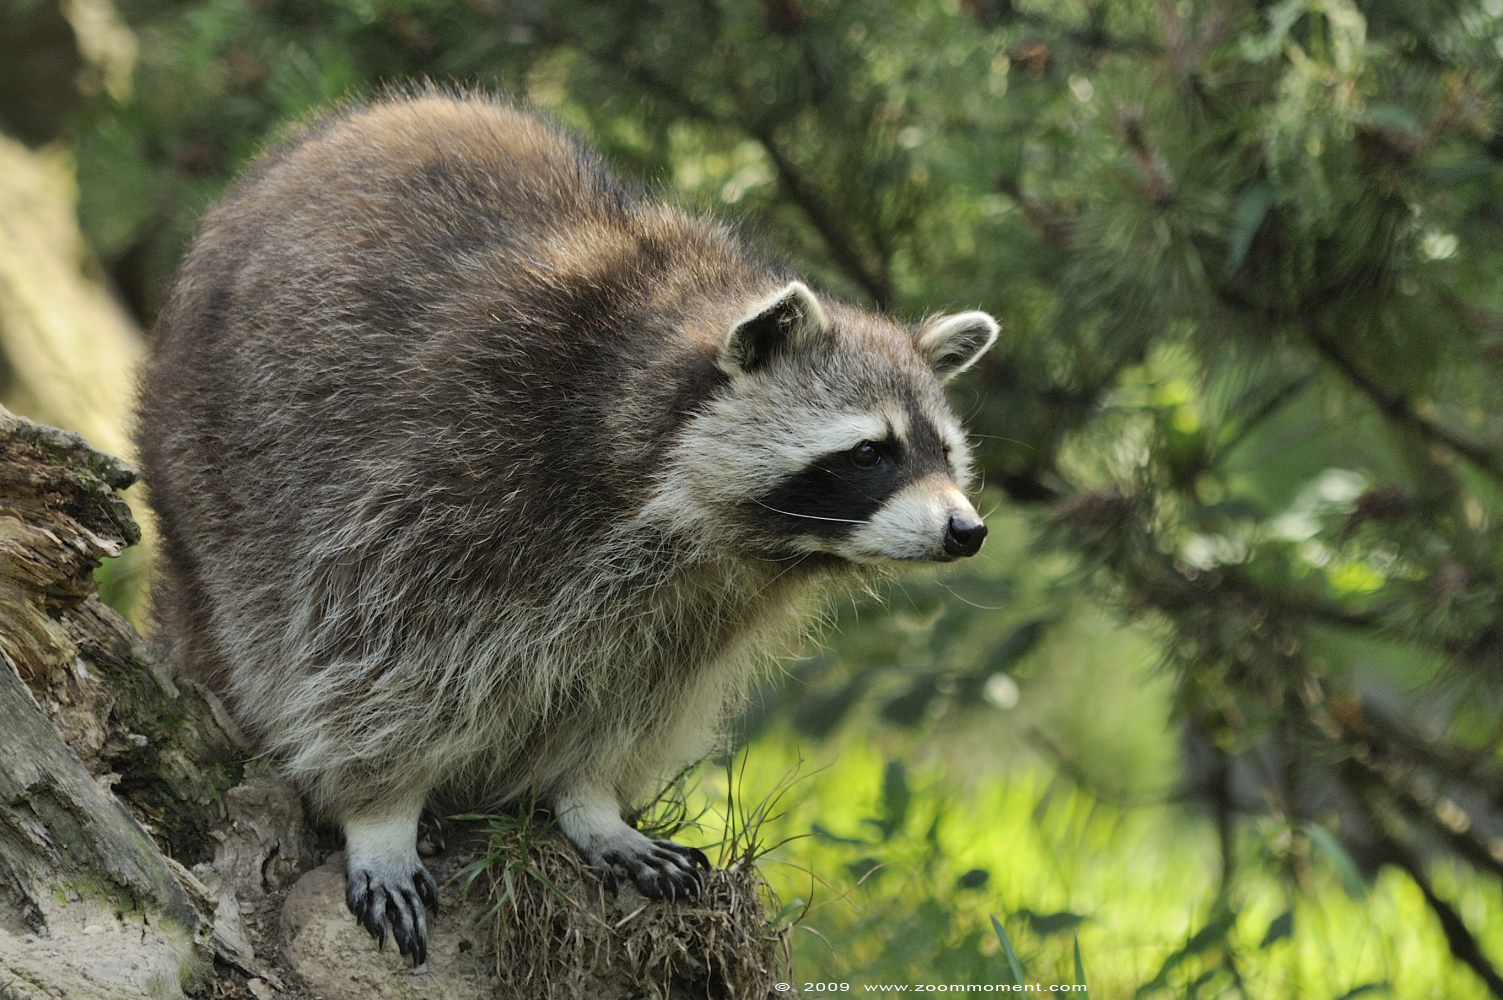 wasbeer  ( Procyon lotor )  raccoon
Trefwoorden: Gelsenkirchen Zoom Erlebniswelt Germany Duitsland zoo Procyon lotor wasbeer raccoon